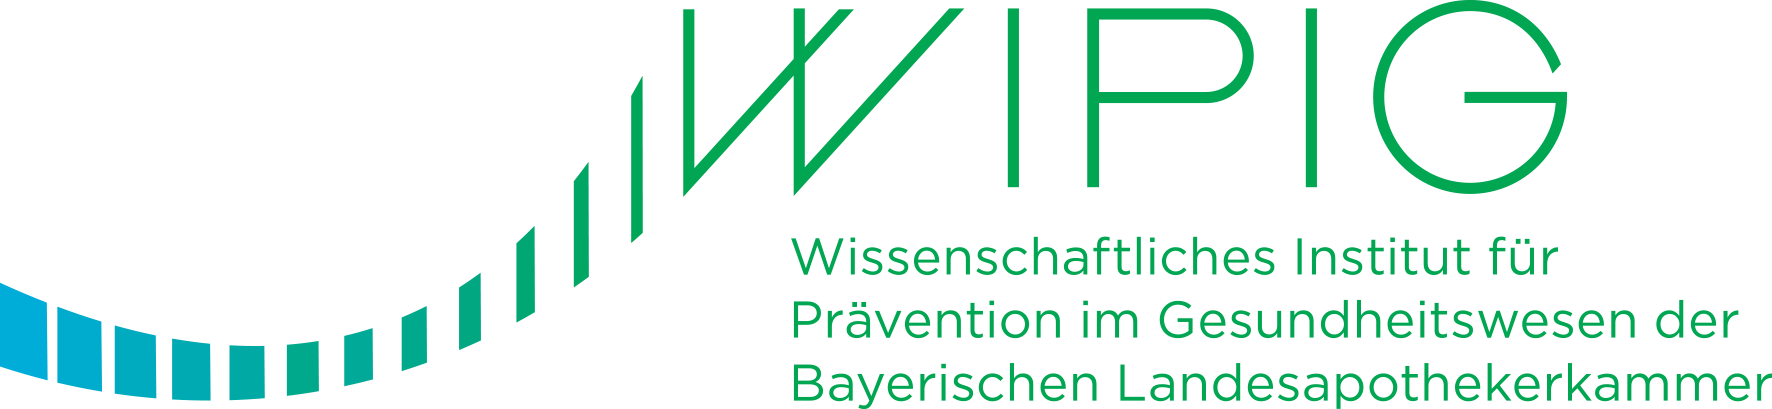 WIPIG Logo 2018 RGB Web